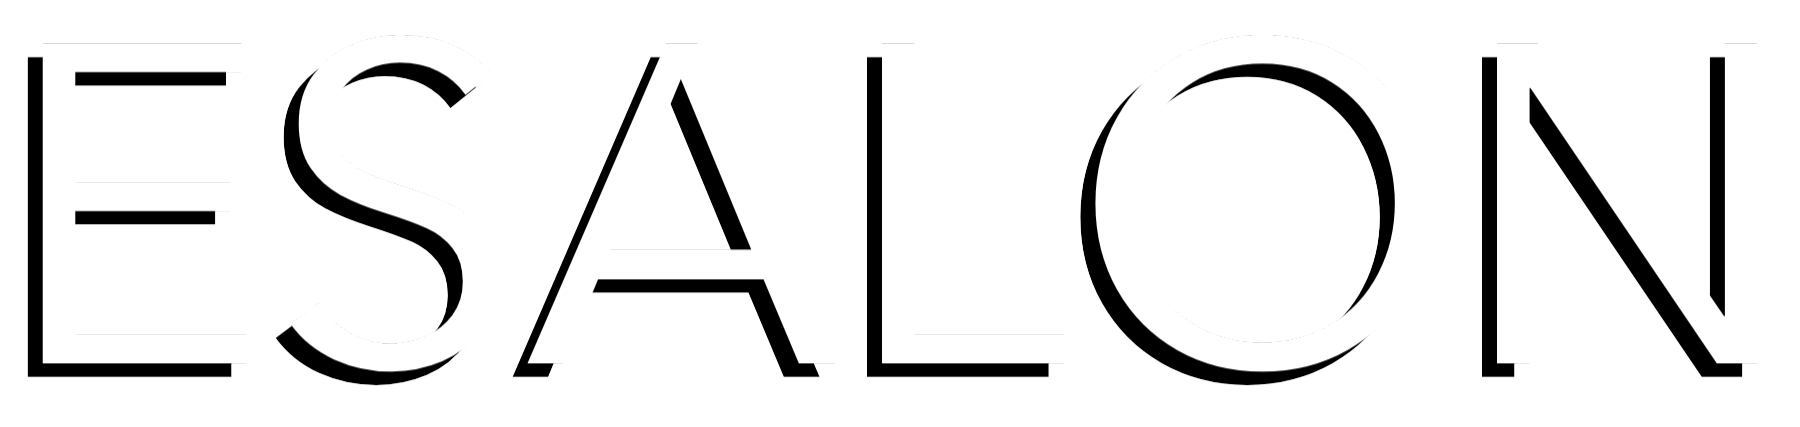 esalon  white letters logo